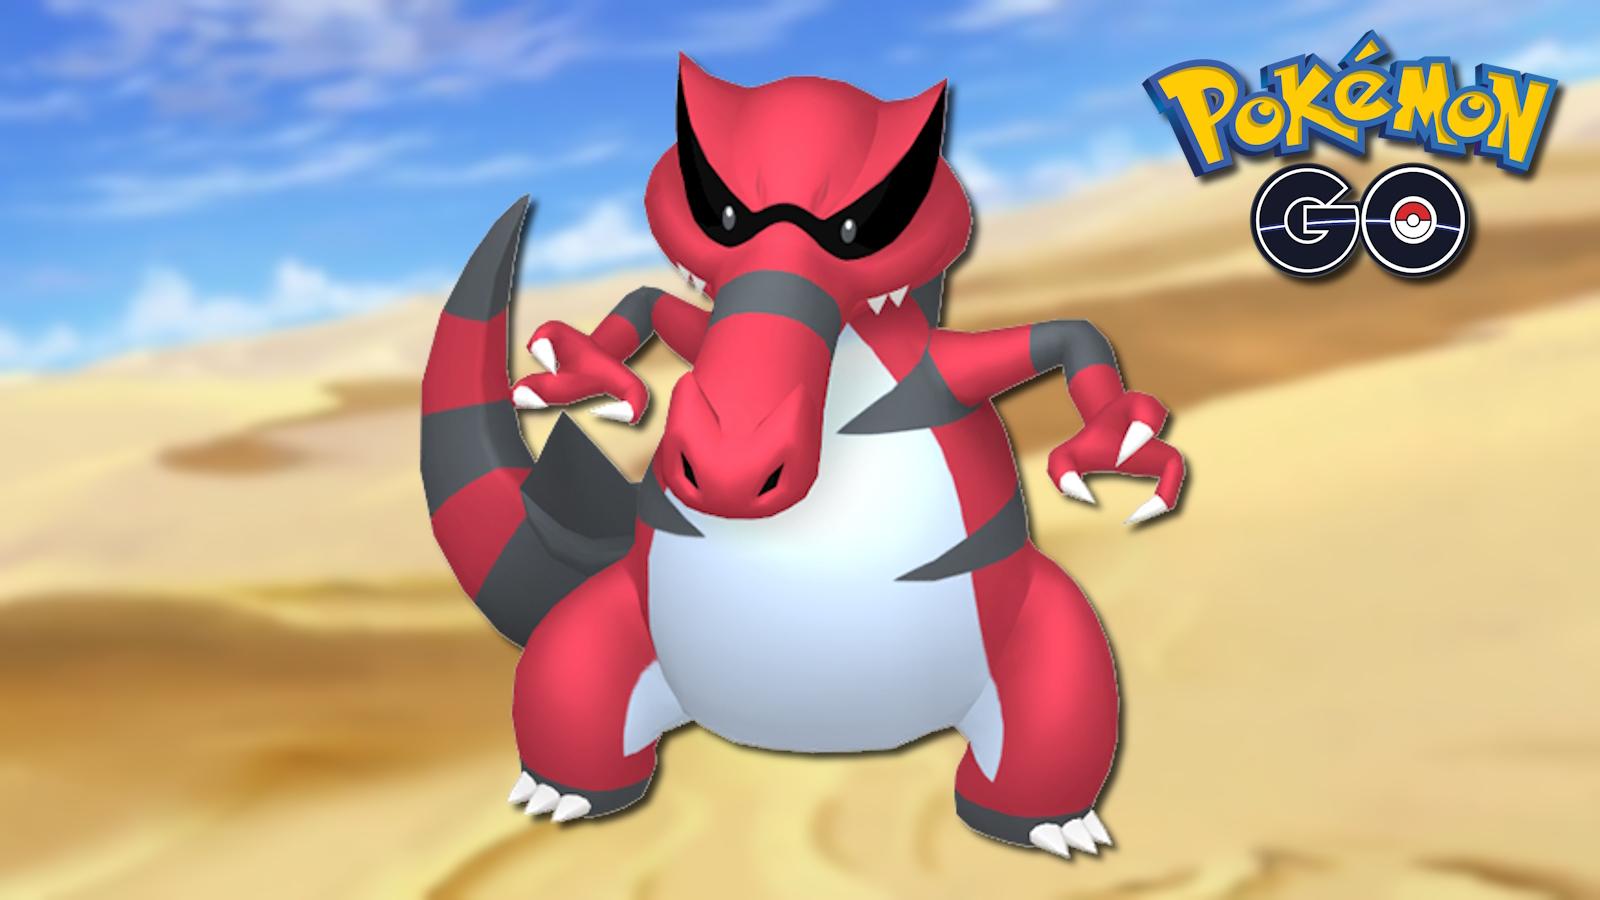 Krookodile's 3D Pokemon Go model posing.